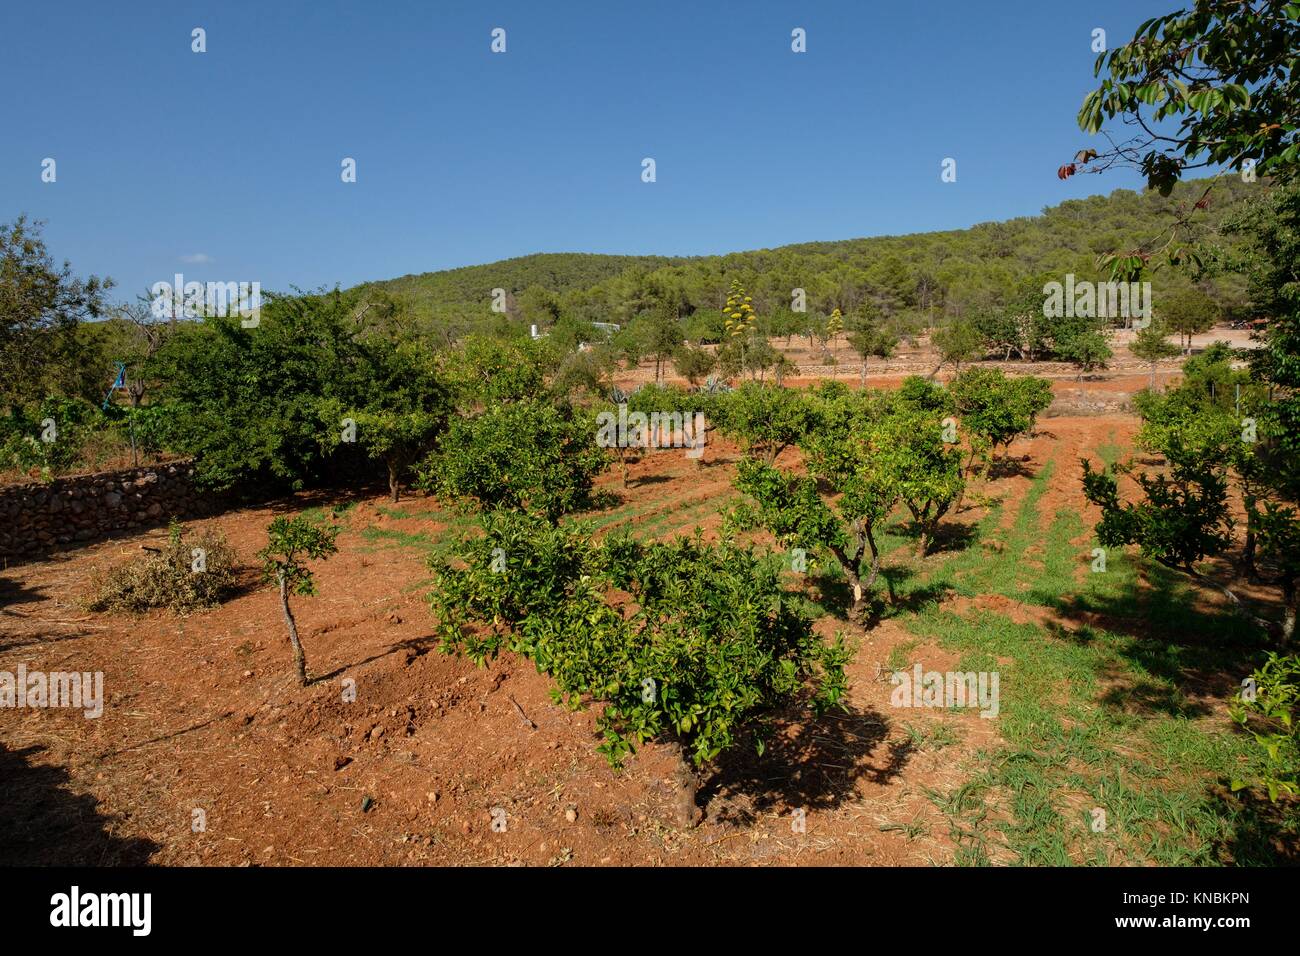 Viña de cepa baja (low body vineyards), Ets Amunts, Ibiza, Balearic Islands, Spain. Stock Photo